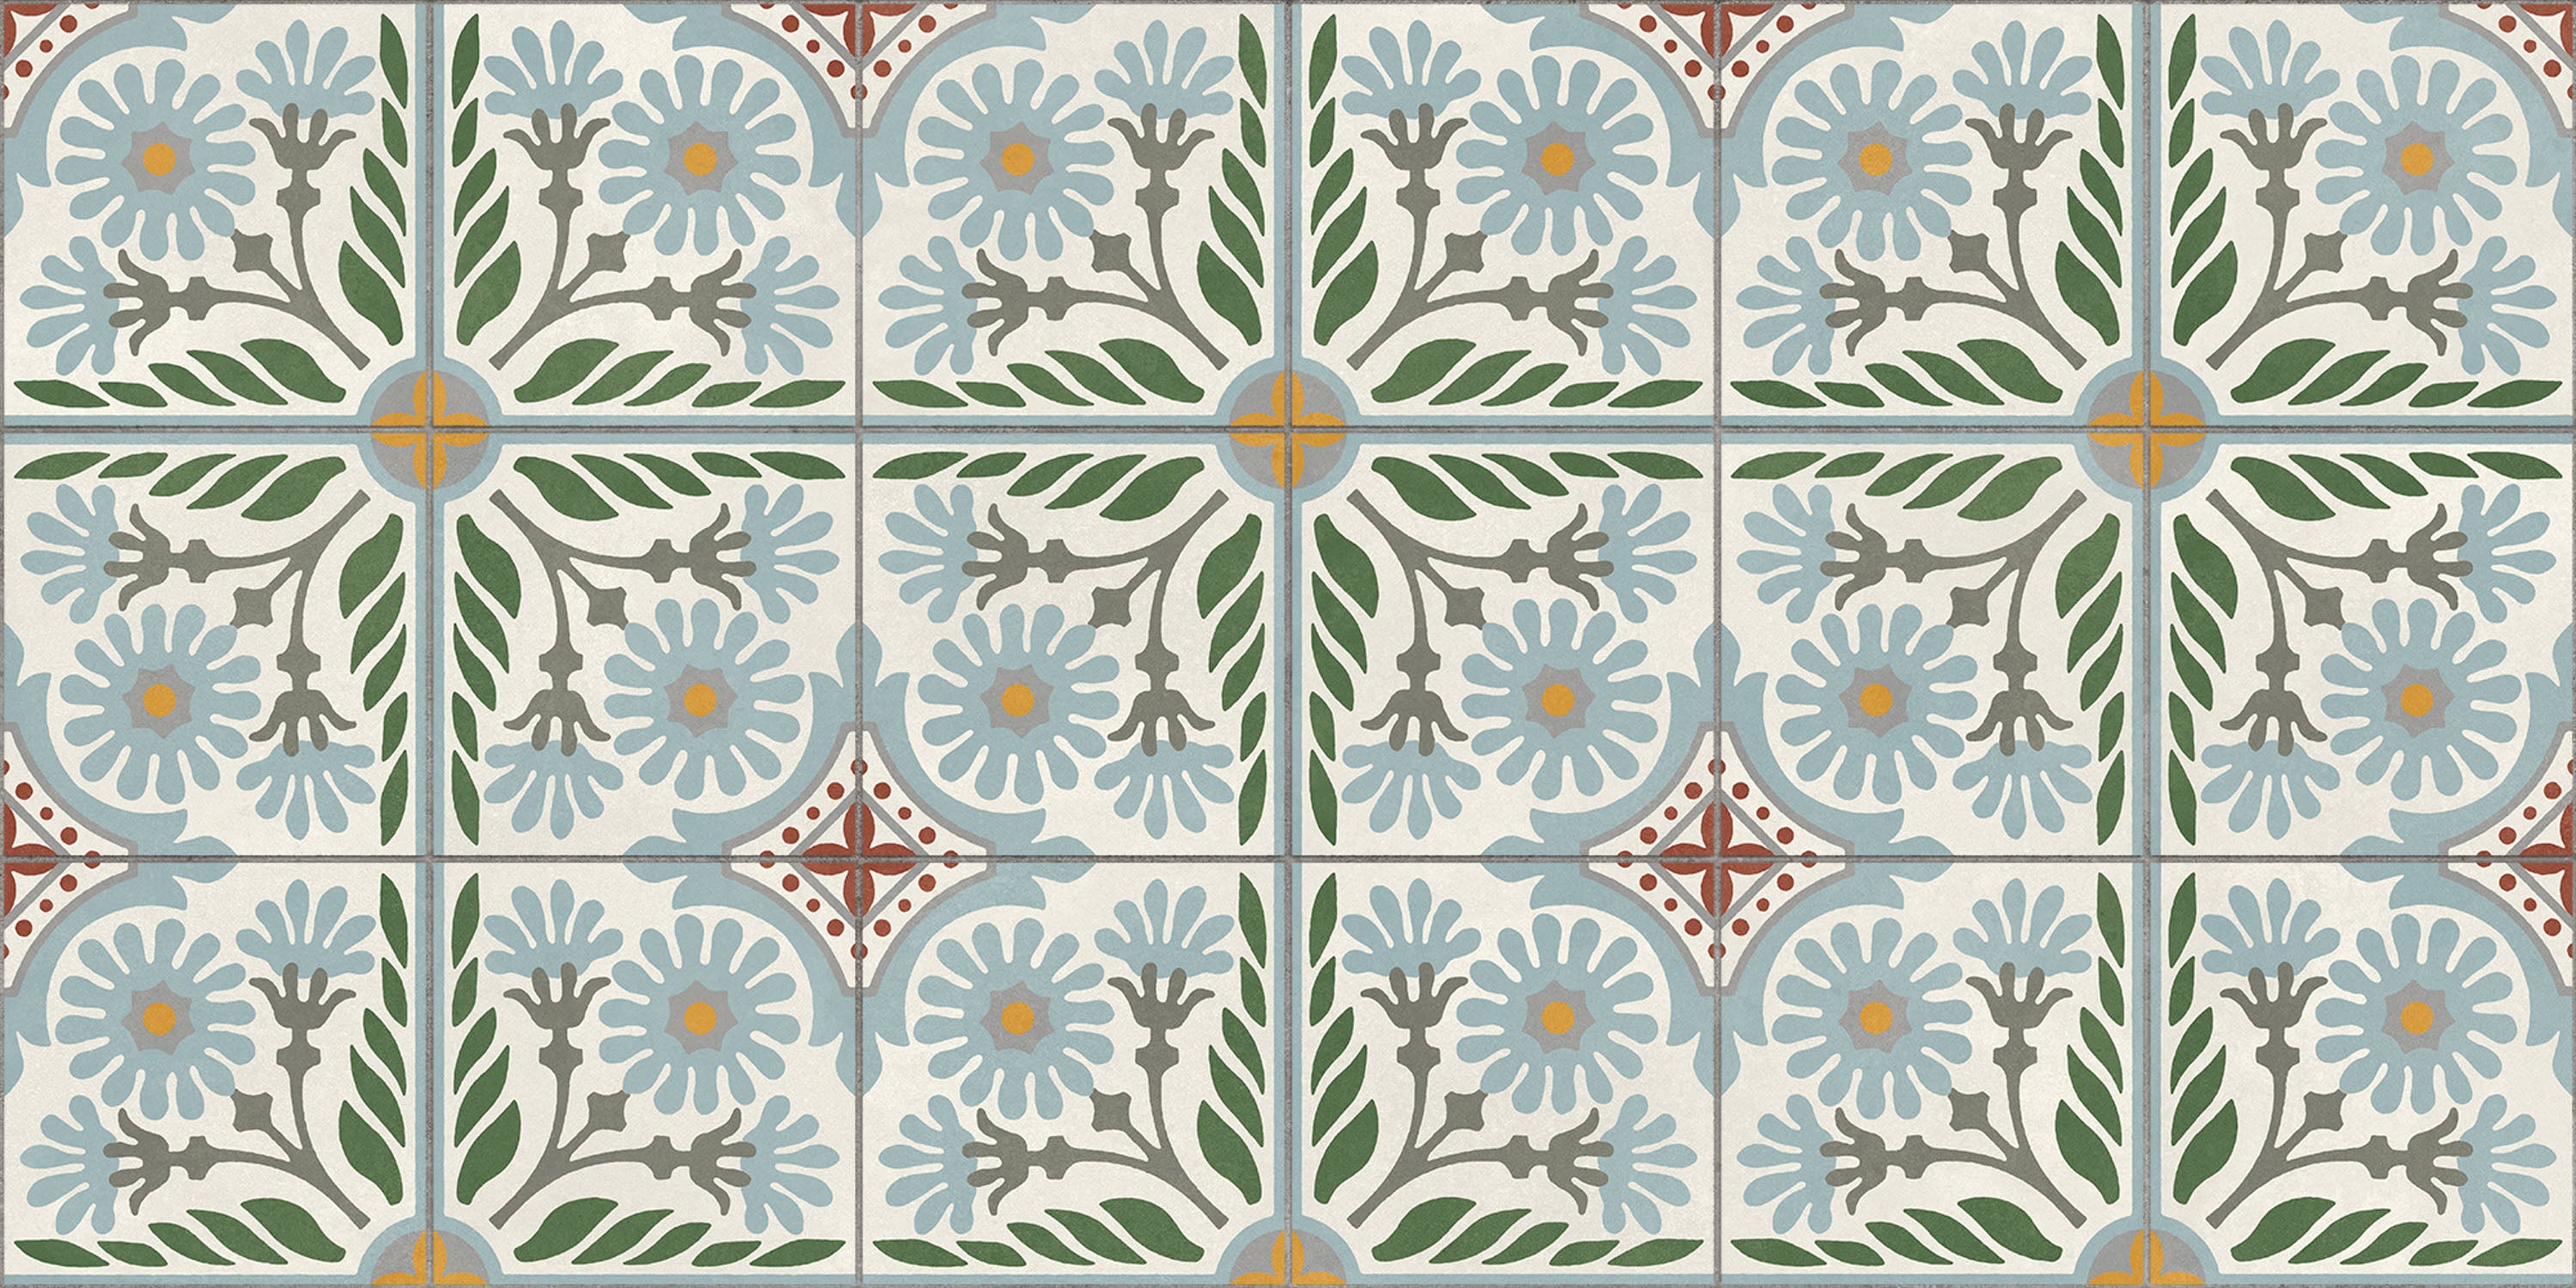 aparici, outdoor tile, outdoor tiles, altea olivo outdoor, altea olivo tile, patterned tile.